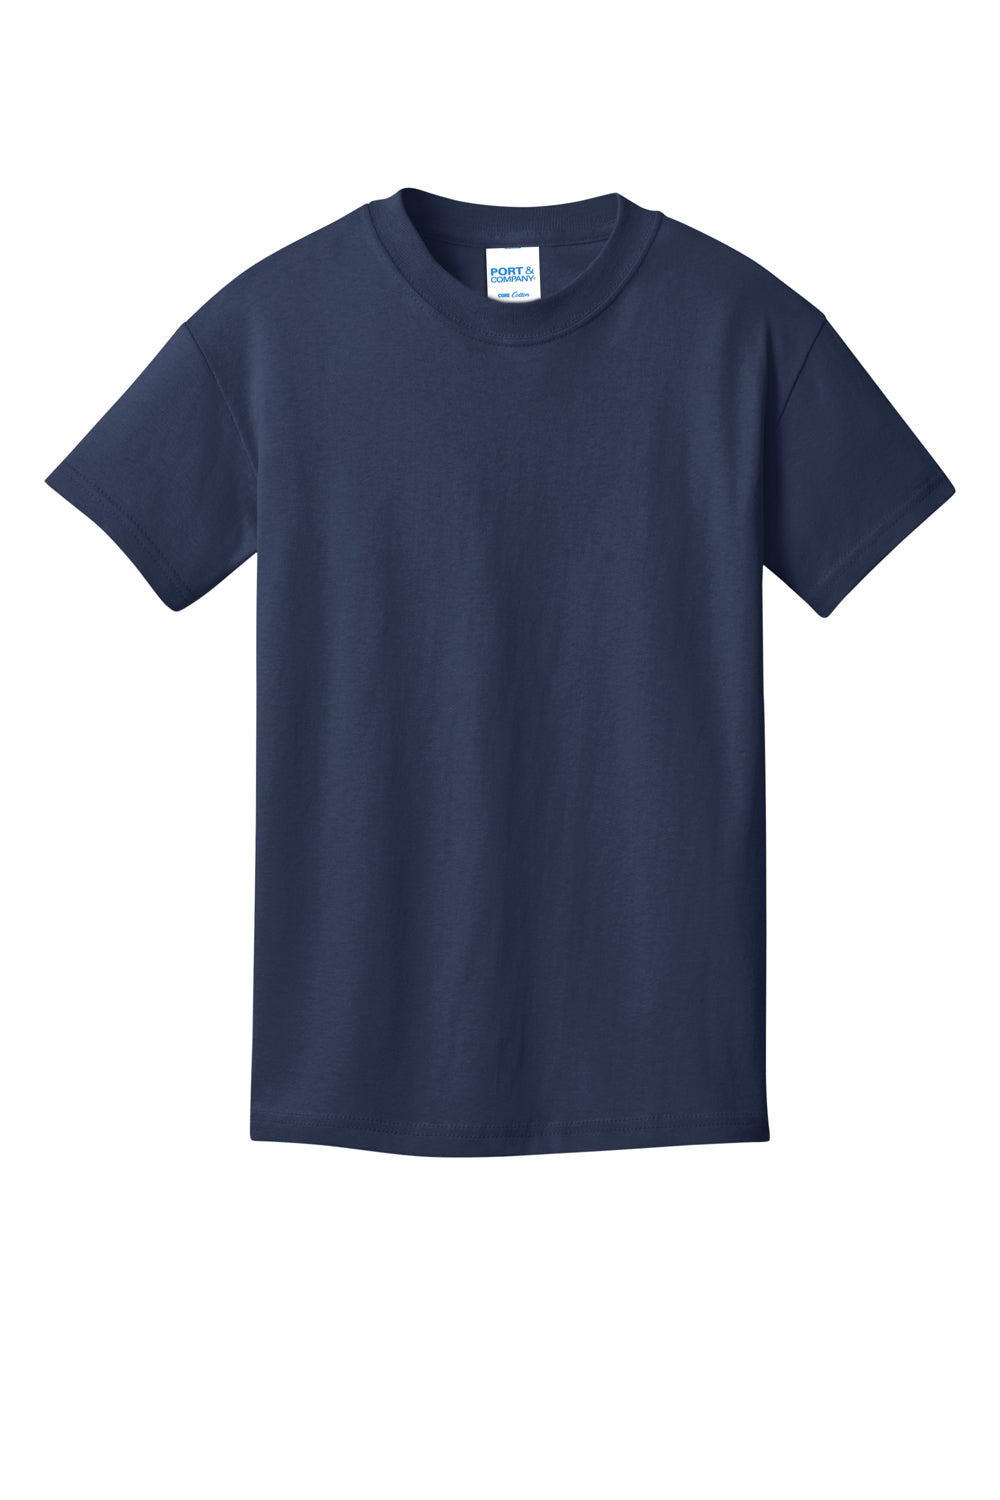 Port & Company PC54YDTG Core Cotton DTG Short Sleeve Crewneck T-Shirt Navy Blue Flat Front